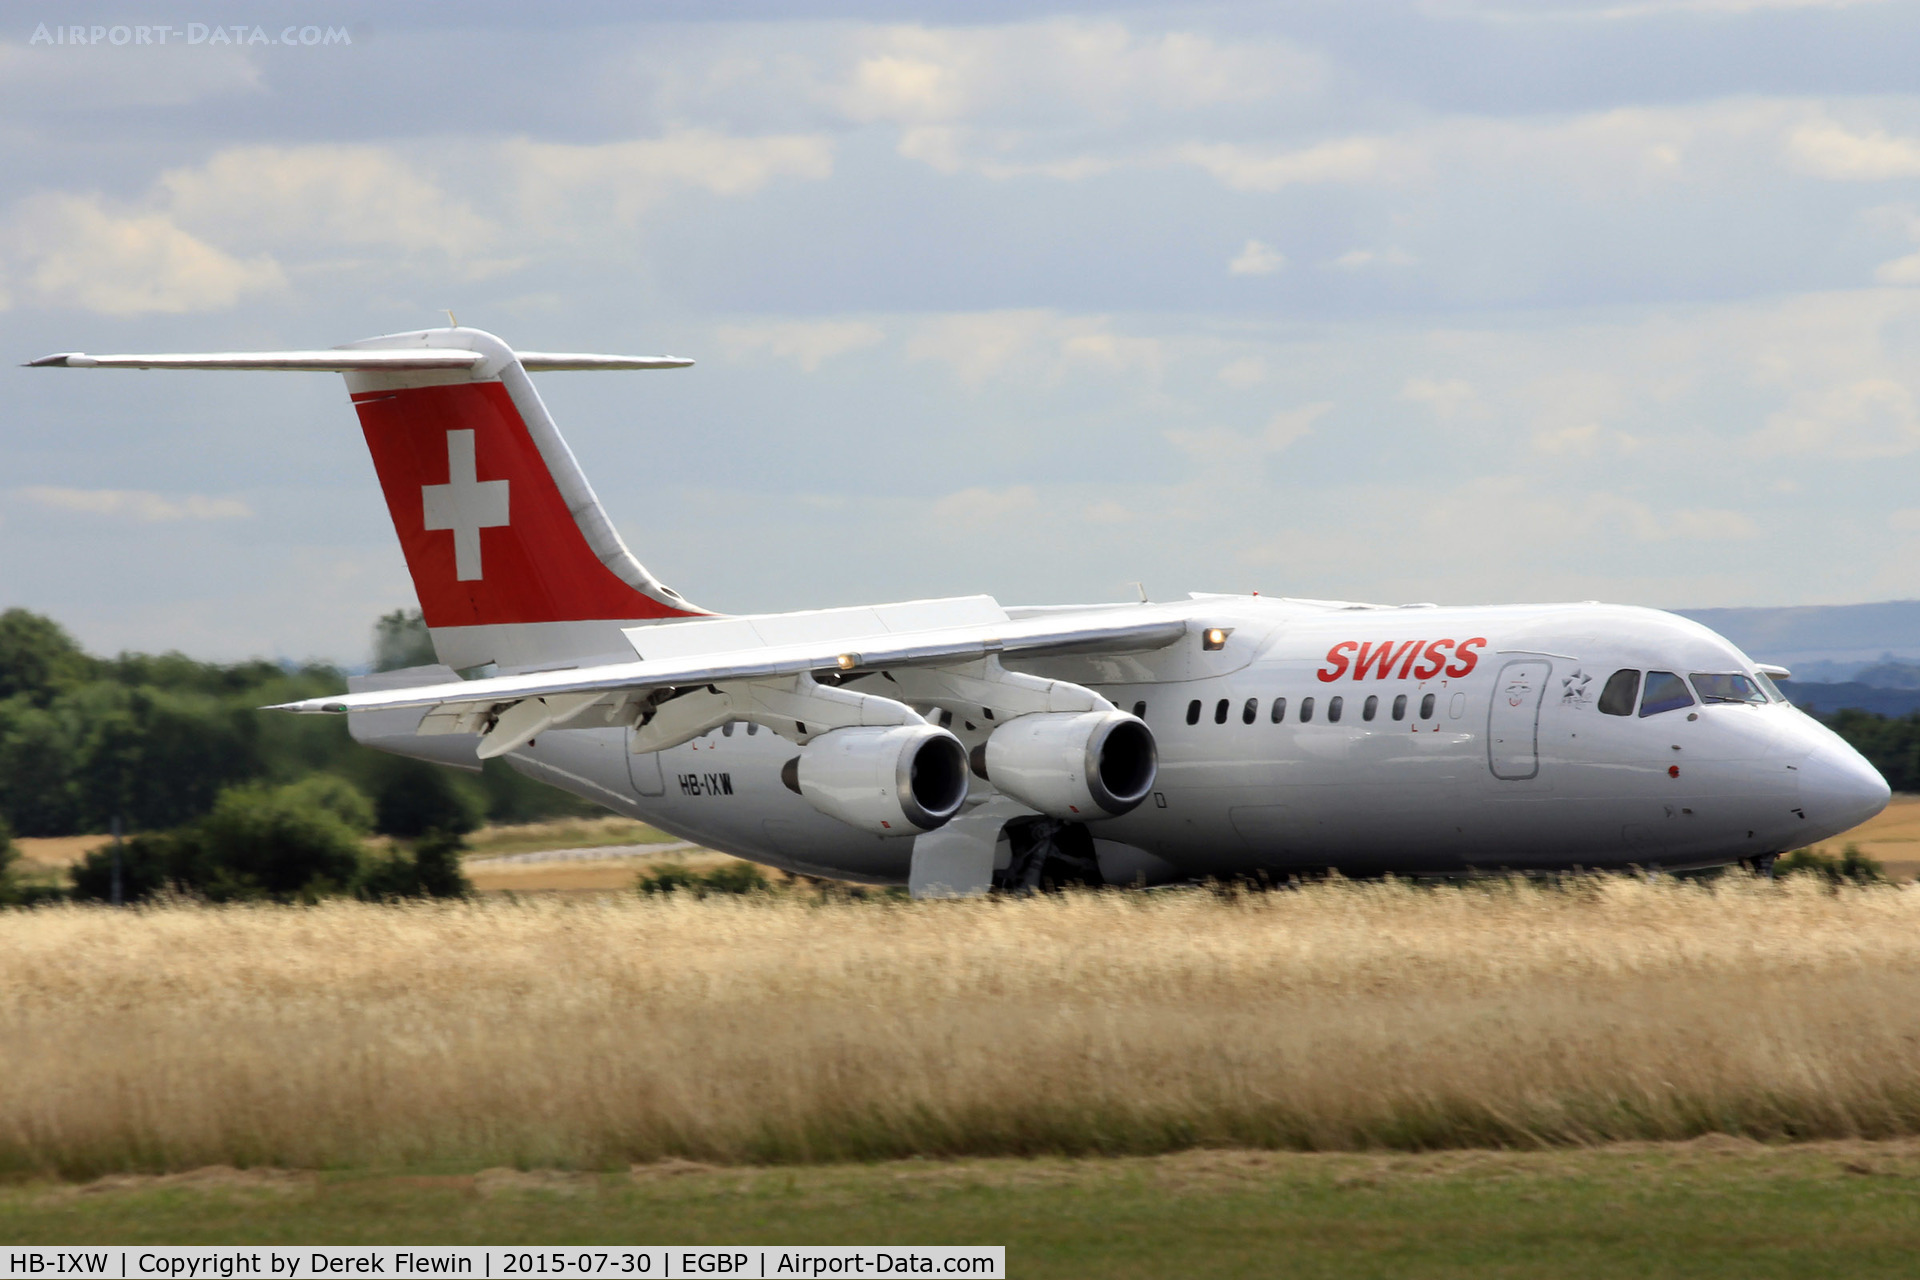 HB-IXW, 1995 British Aerospace Avro 146-RJ100 C/N E3272, Avro 146-RJ100, Swiss International Air Lines, Zurich based, previously G-6-272, seen landing on runway 26.